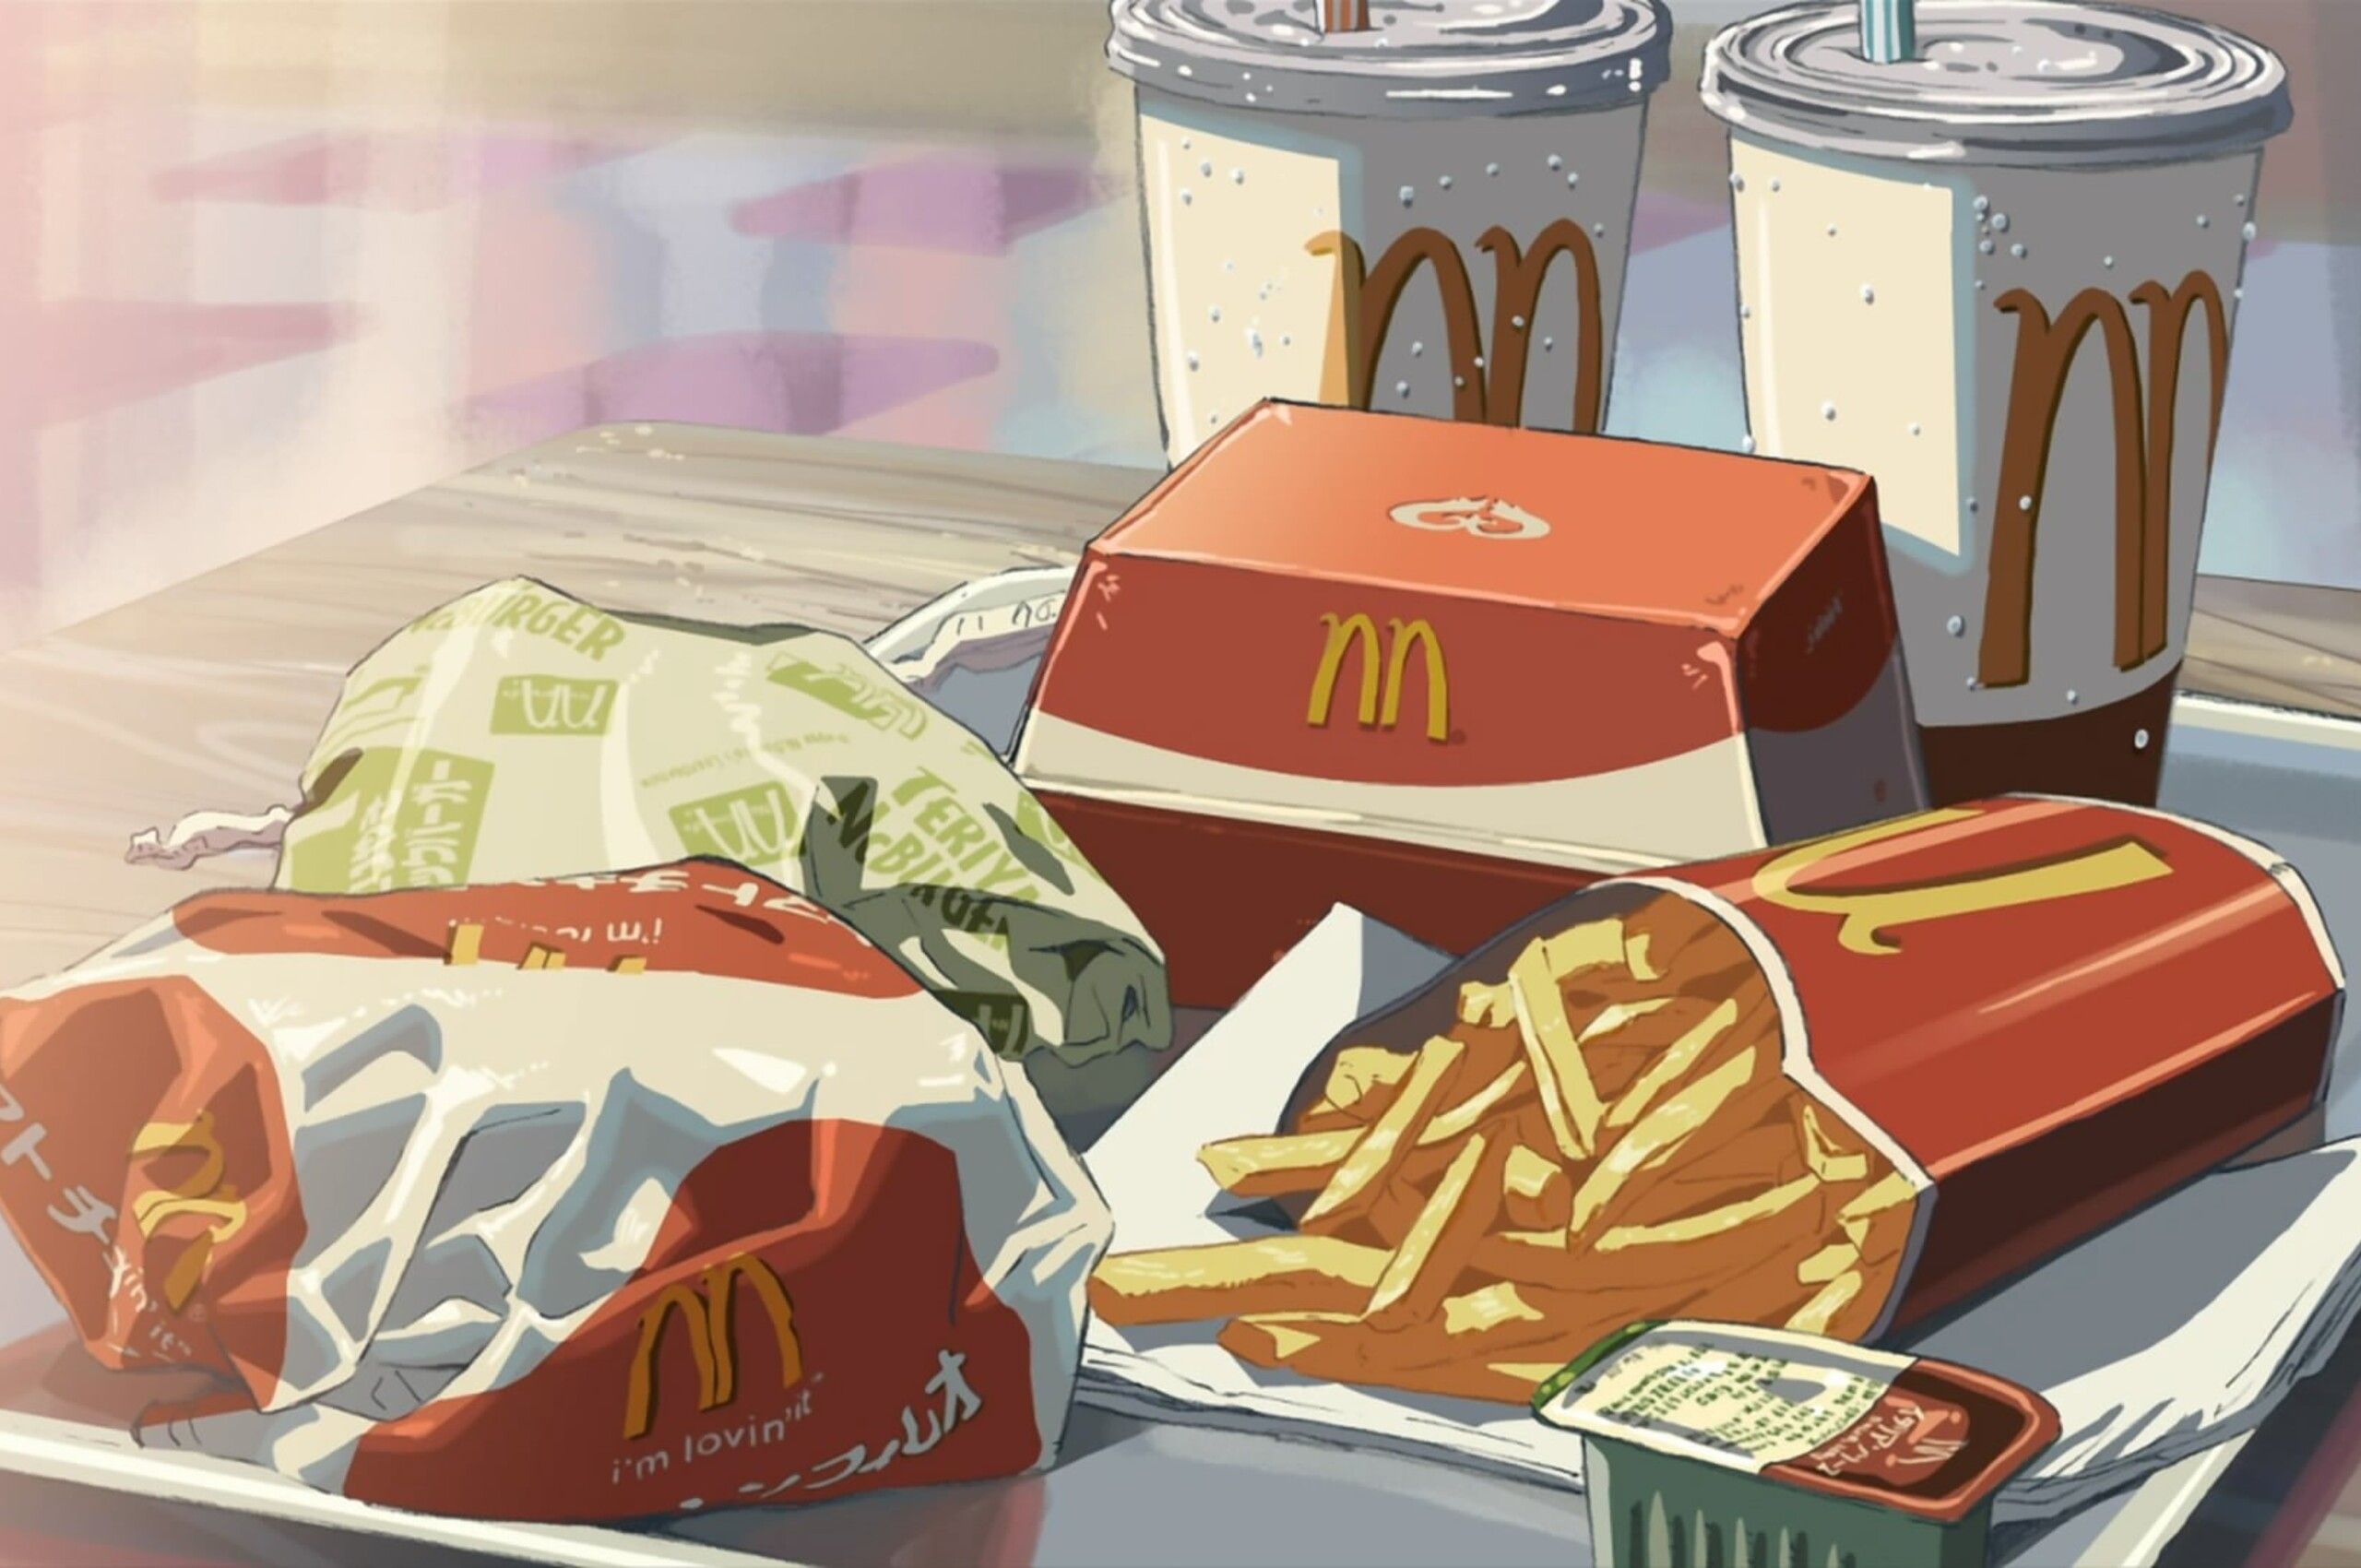  McDonald's Hintergrundbild 2560x1700. Mcdonalds Minimalism Chromebook Pixel HD 4k Wallpaper, Image, Background, Photo and Picture